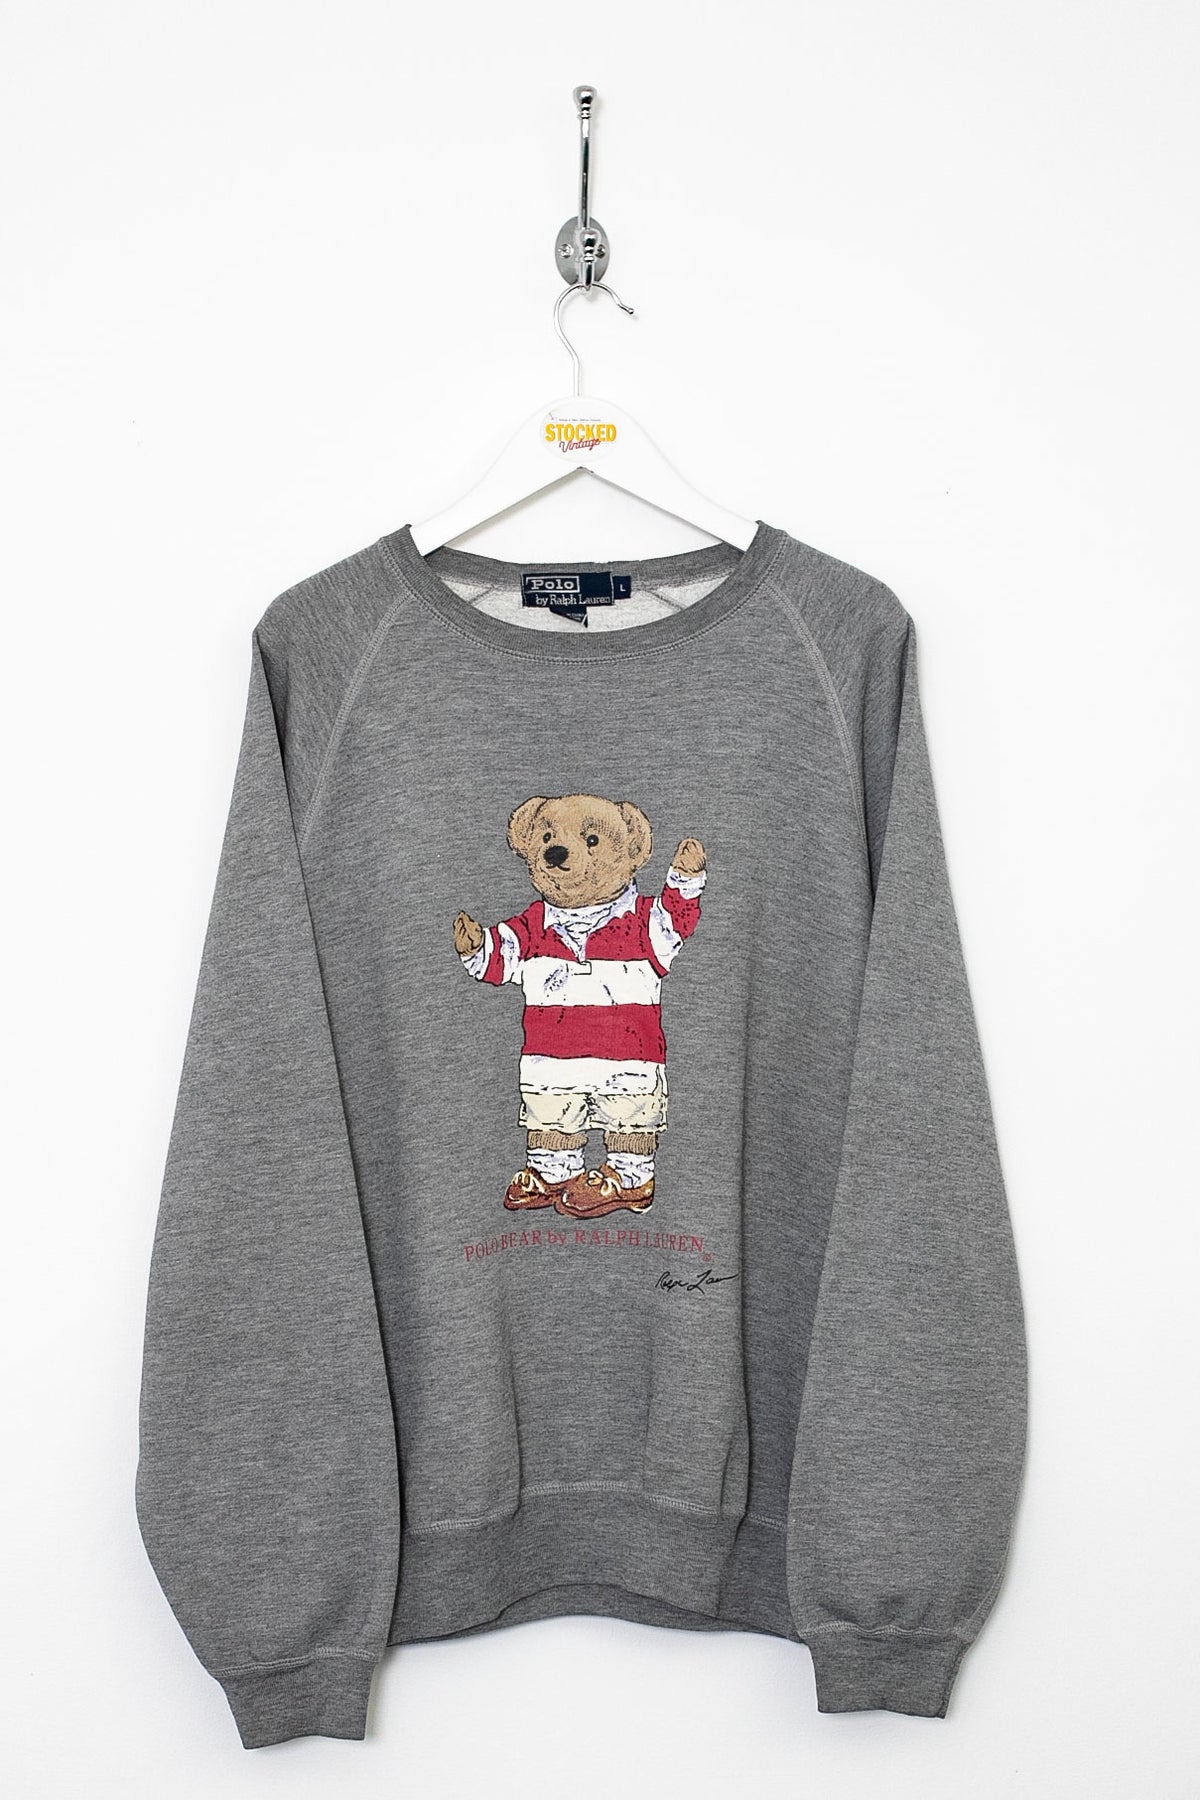 90s Ralph Lauren Polo Bear Sweatshirt (M)